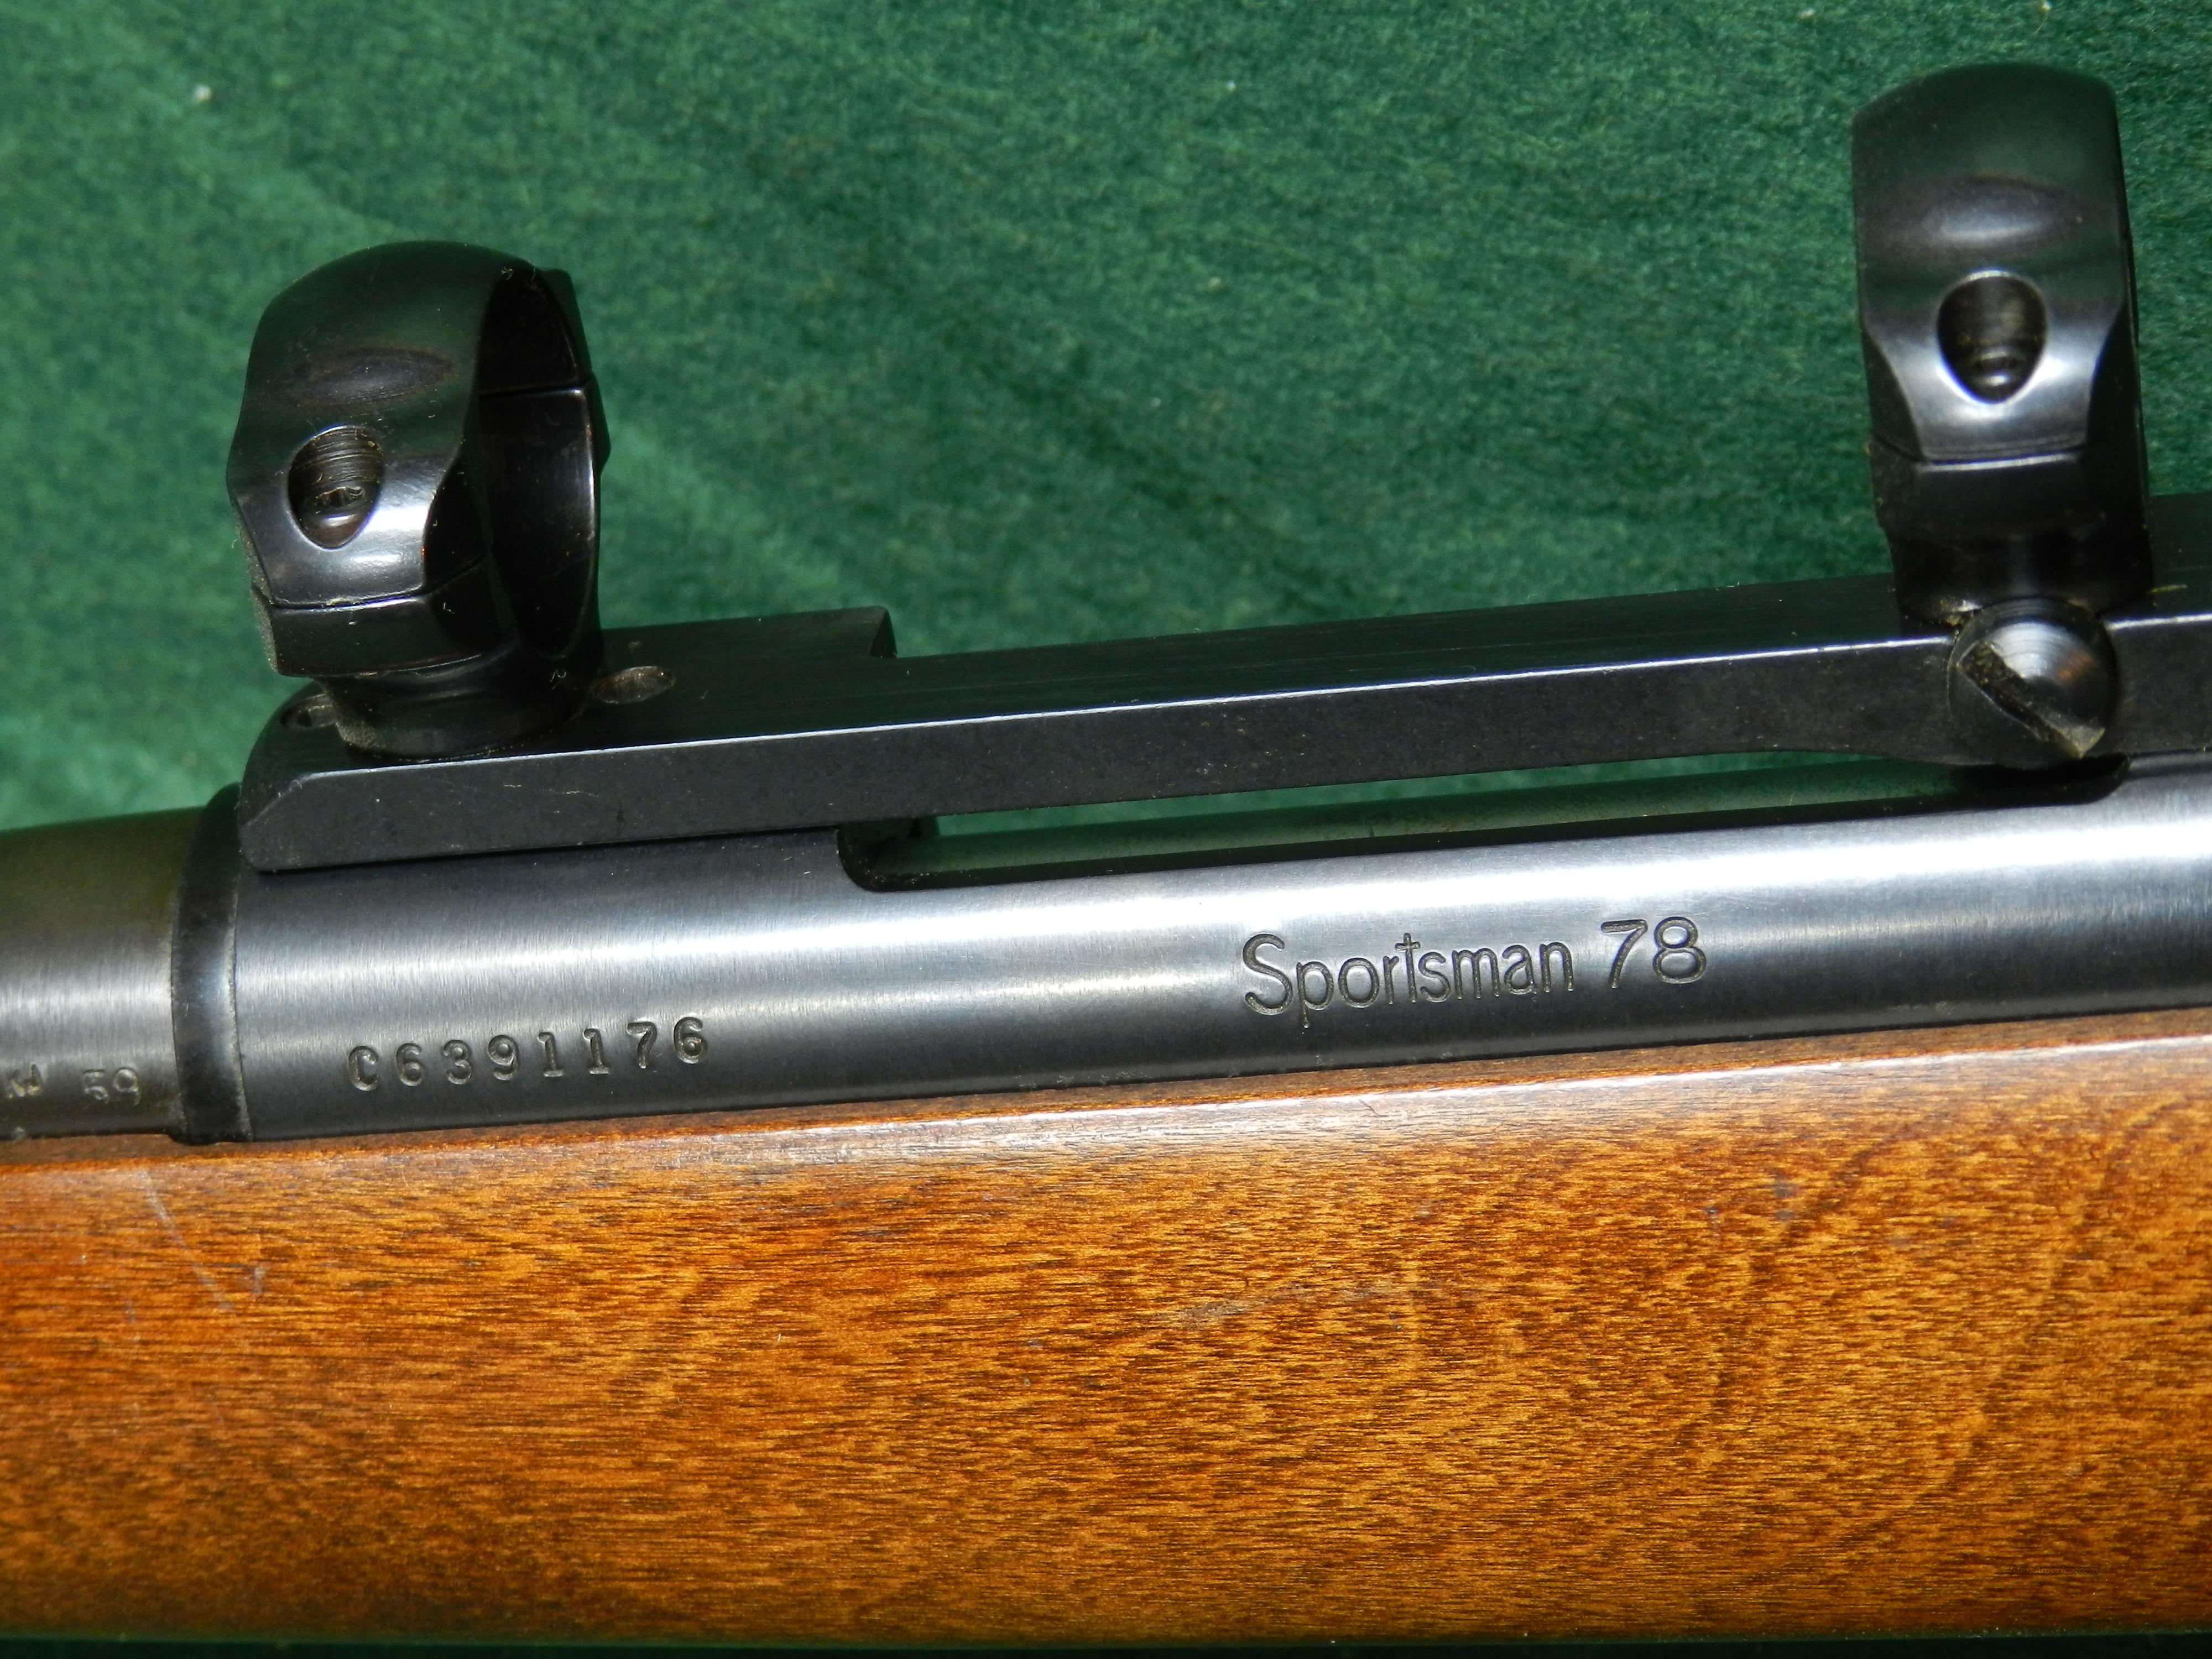 twist rate of a remington sportsman 78 30-06